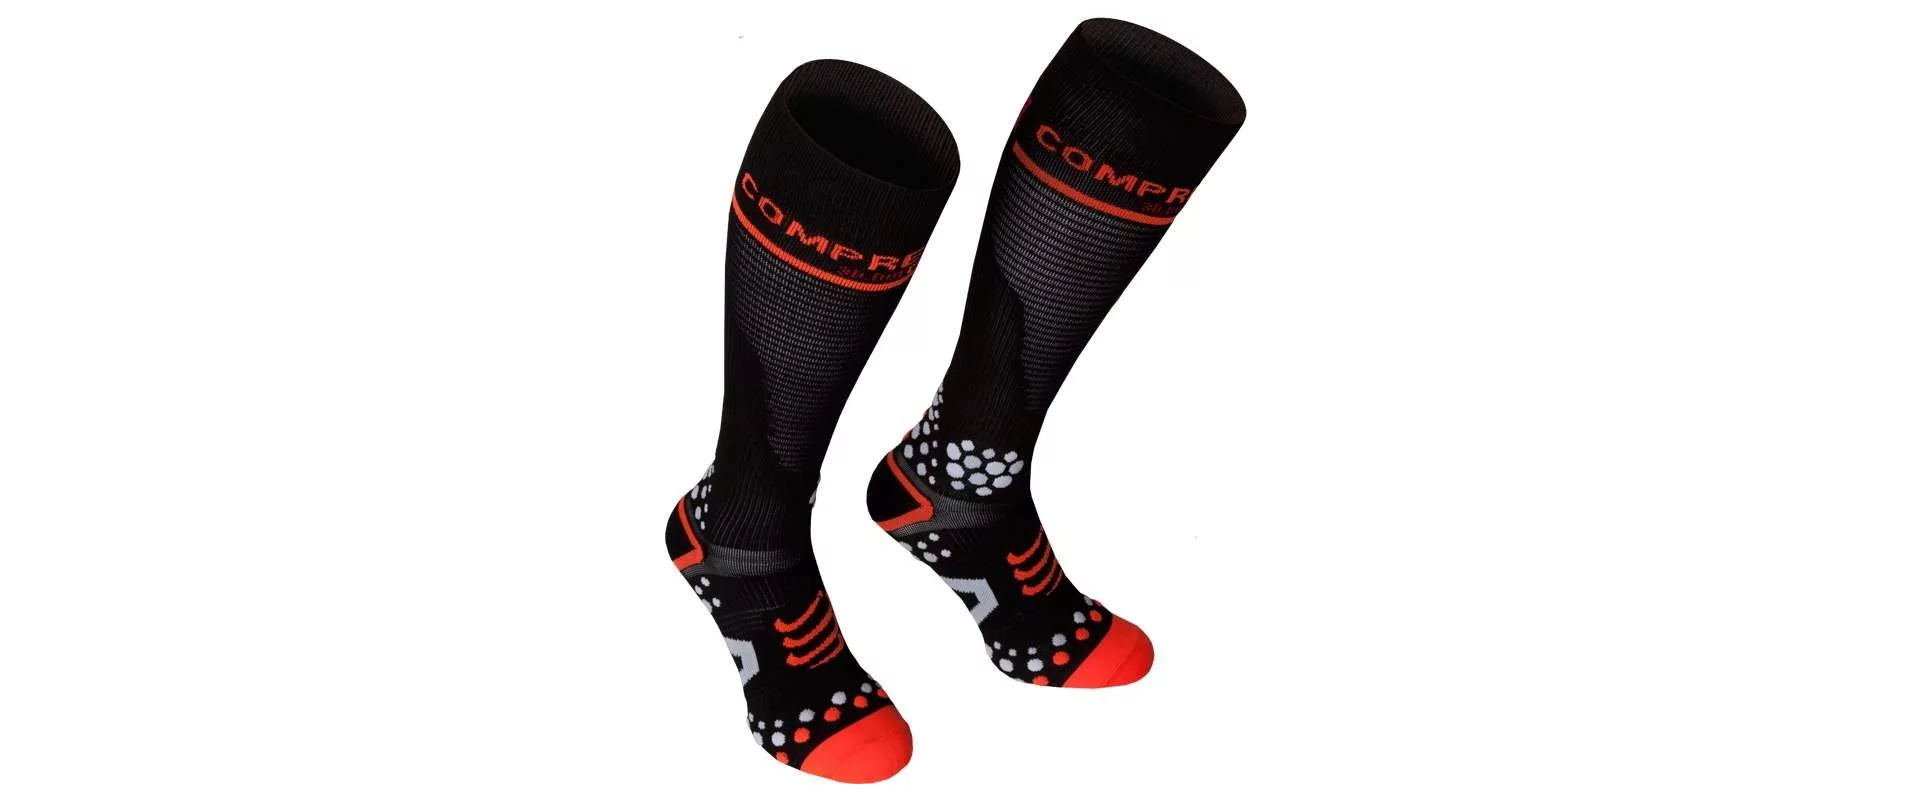 Compressport Full Socks V2 / Компрессионные гольфы